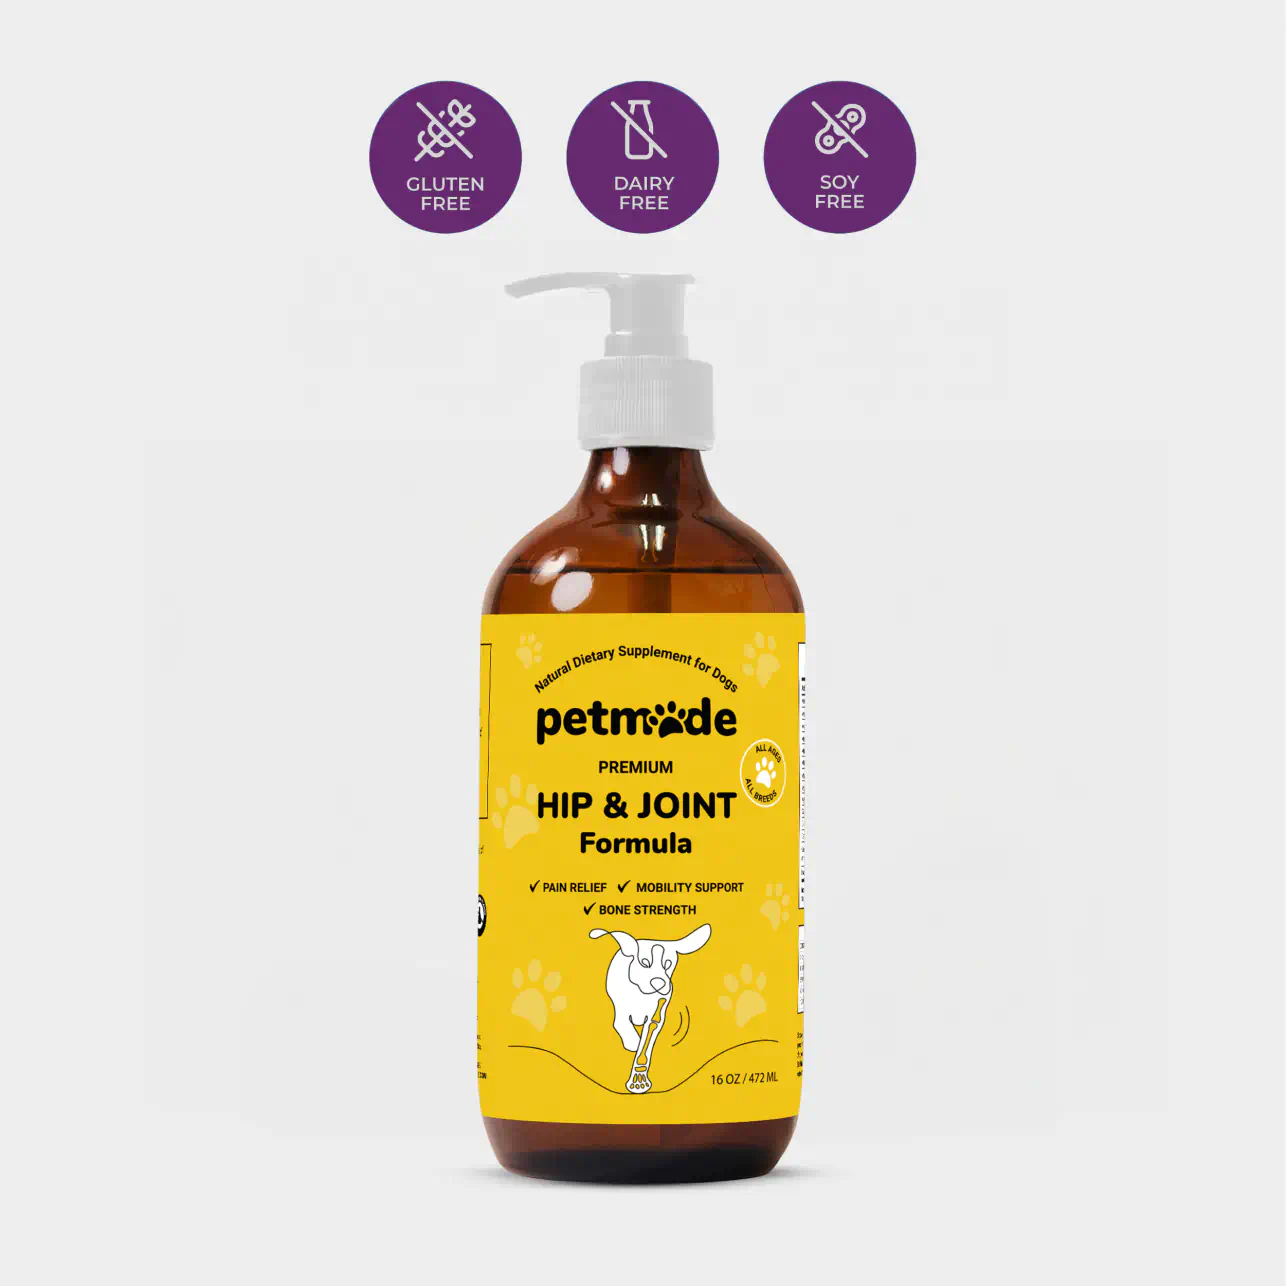 A bottle of PetMade Hip & Joint Formula